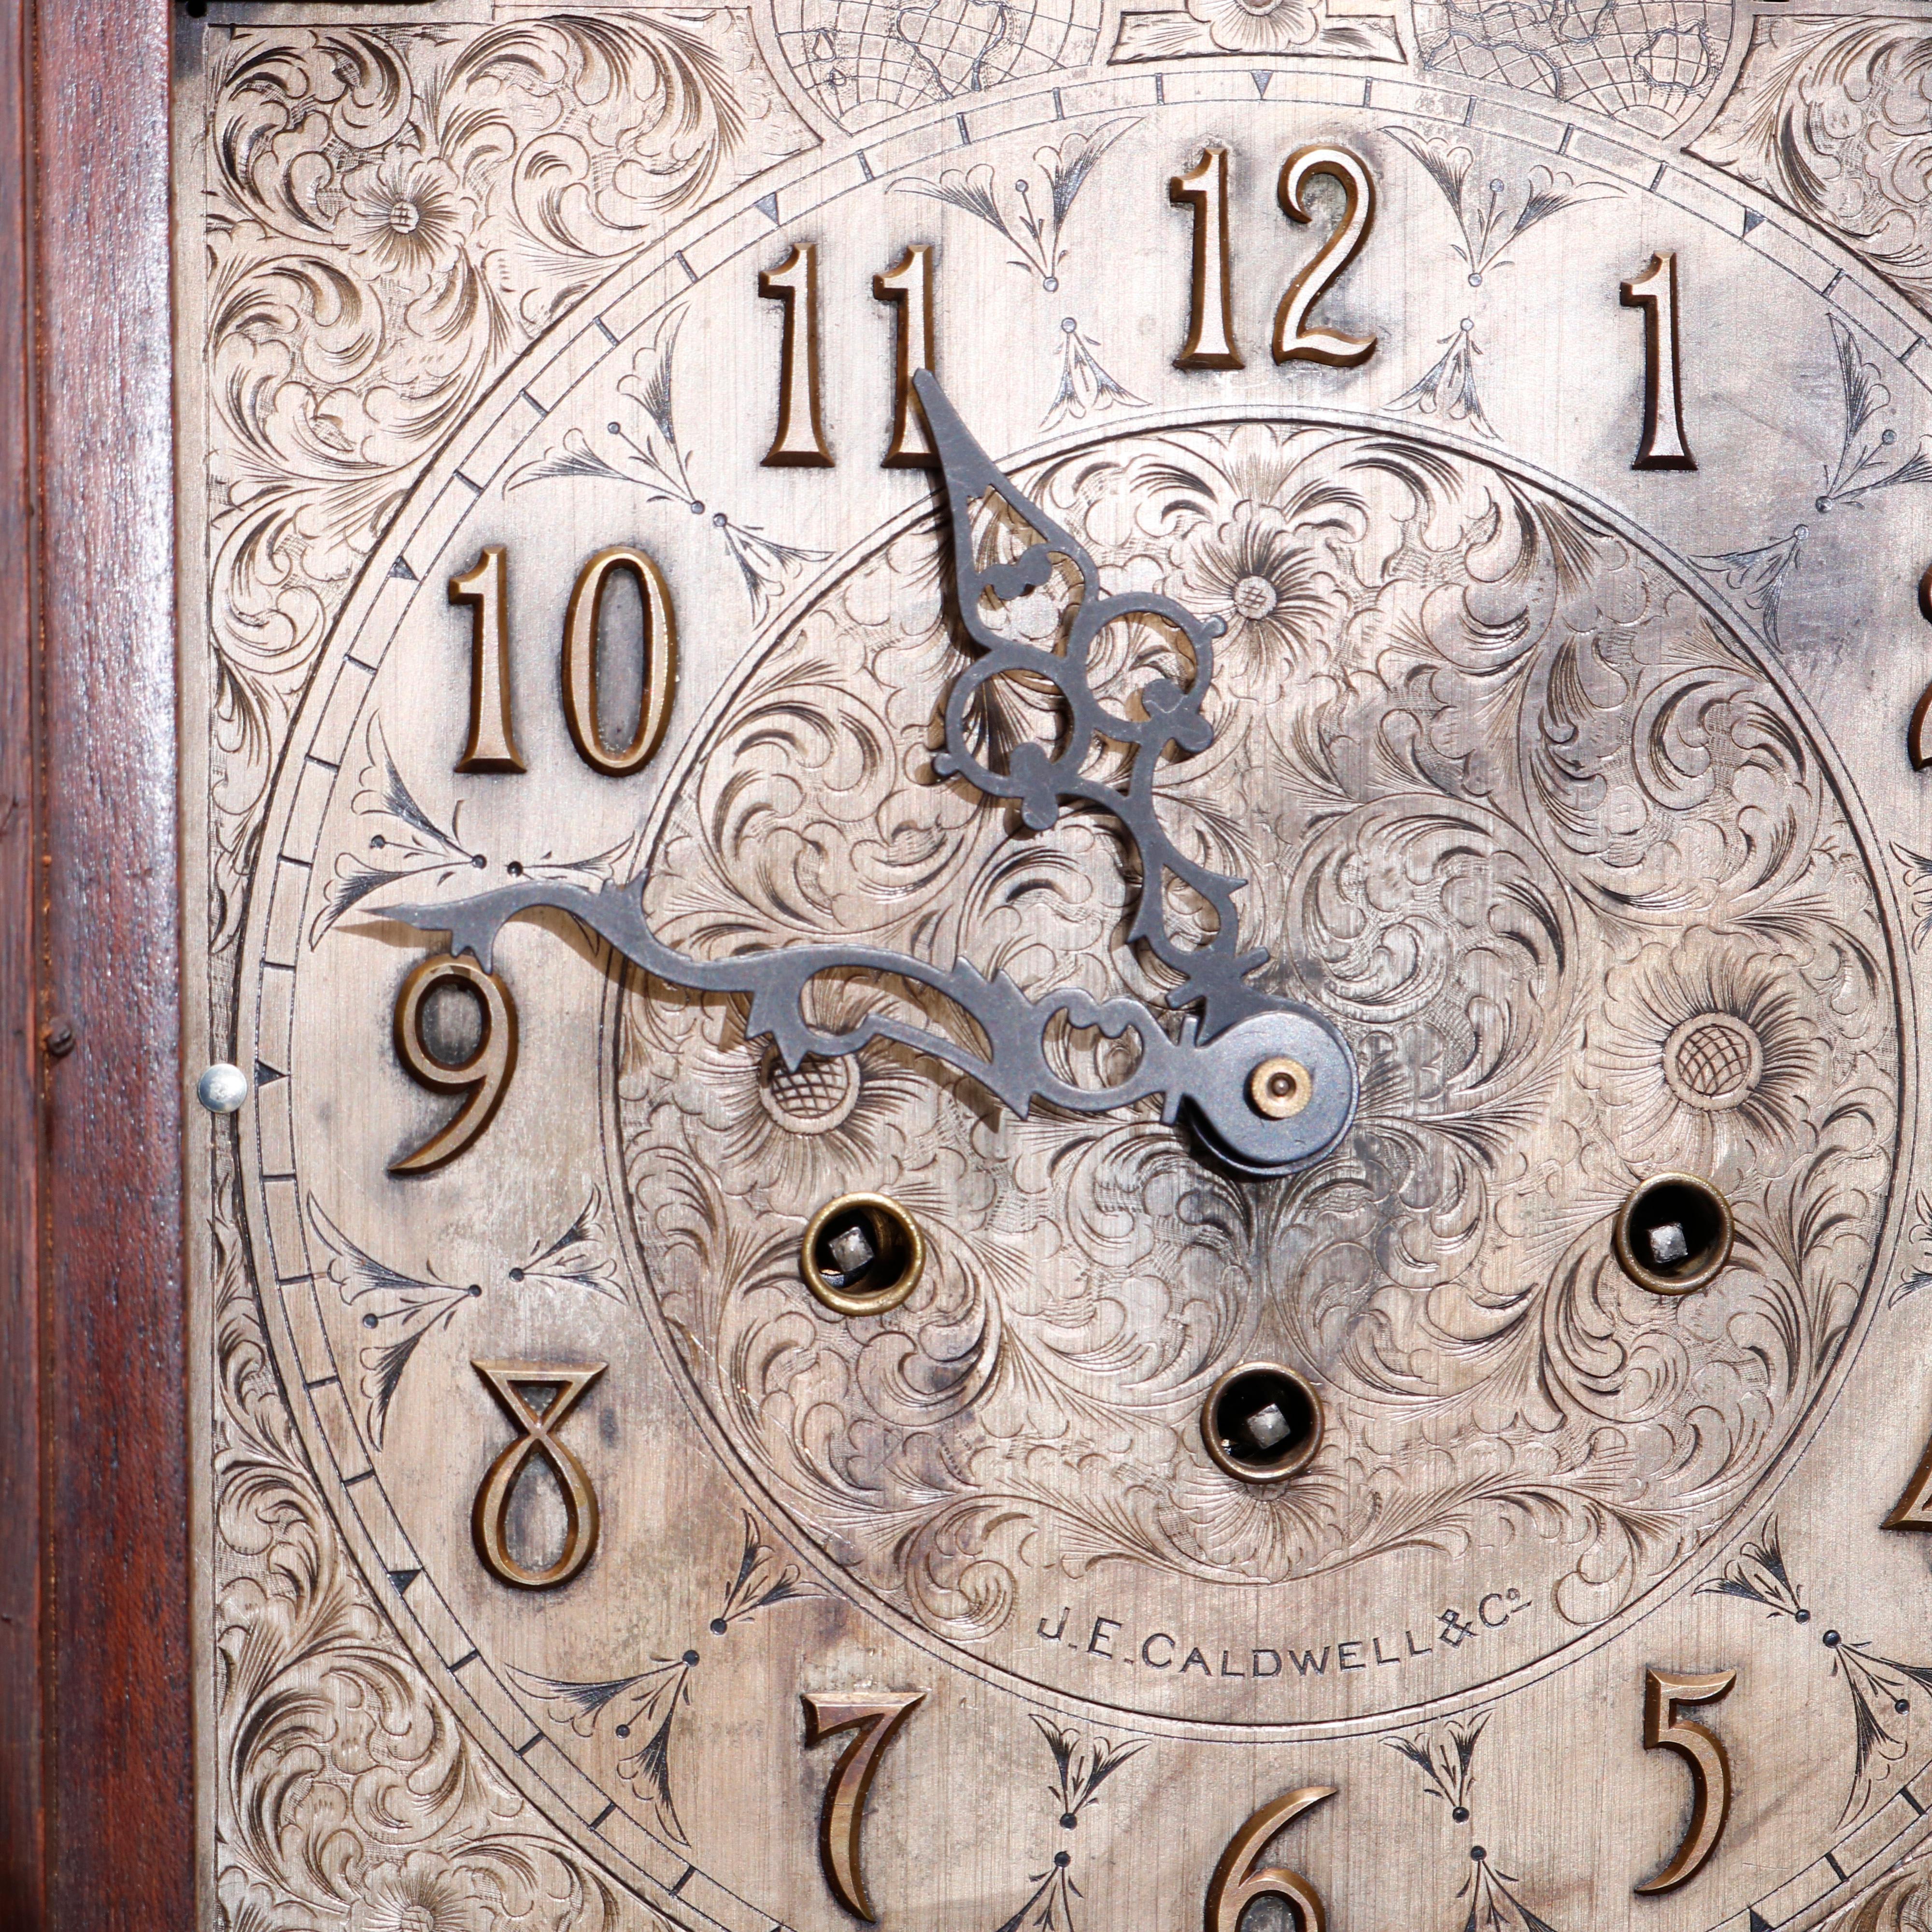 20th Century Antique Diminutive German Caldwell & Co. Mahogany Grandmother's Clock, c1900